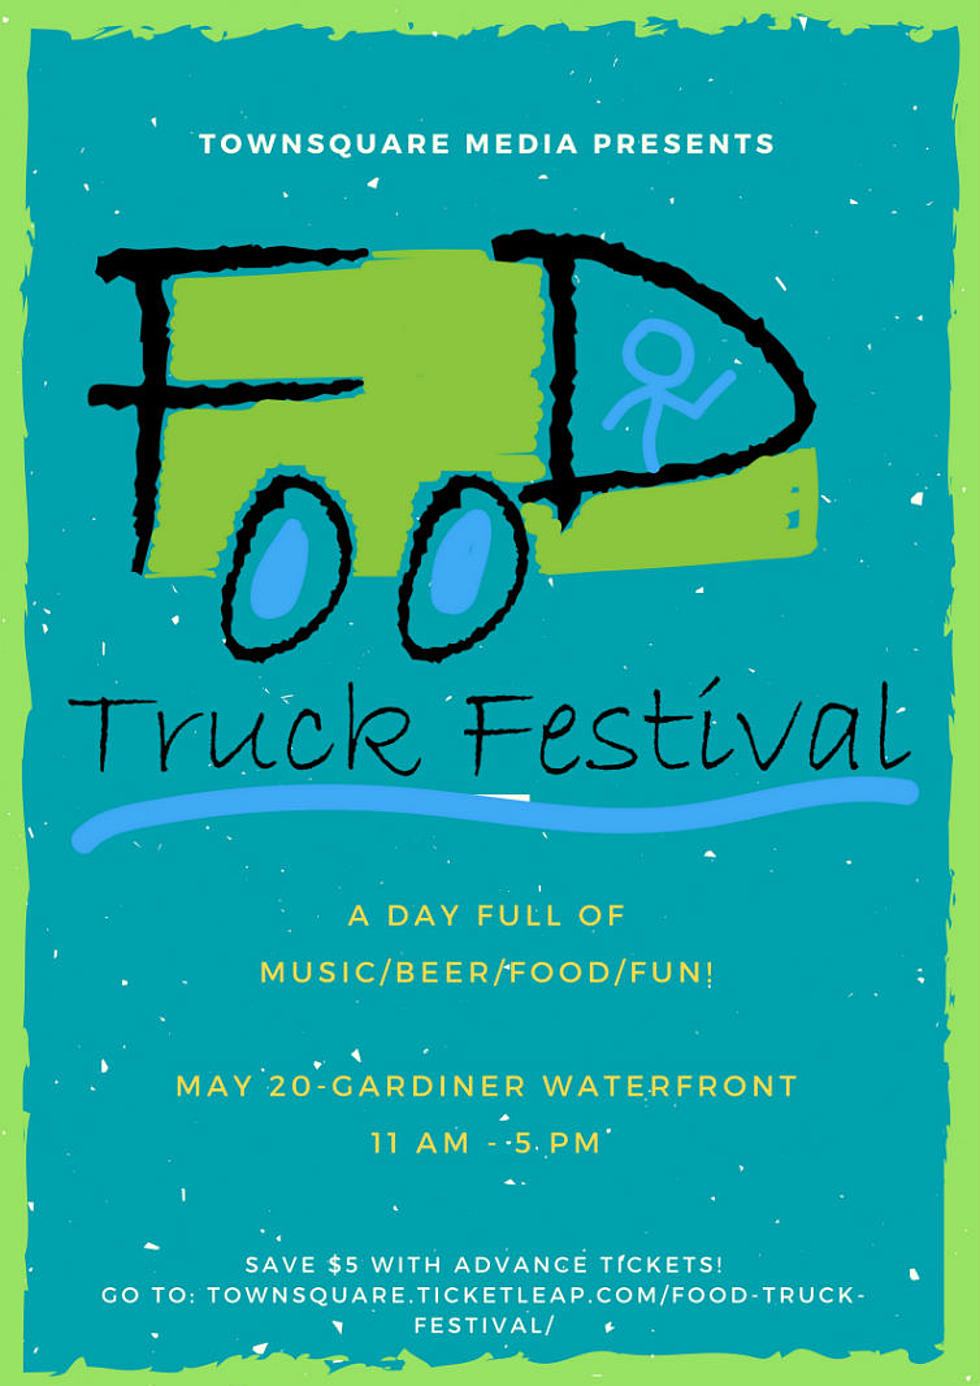 Food Truck Festival Focus:  Heard Food Truck- Great Food that is Gluten Free